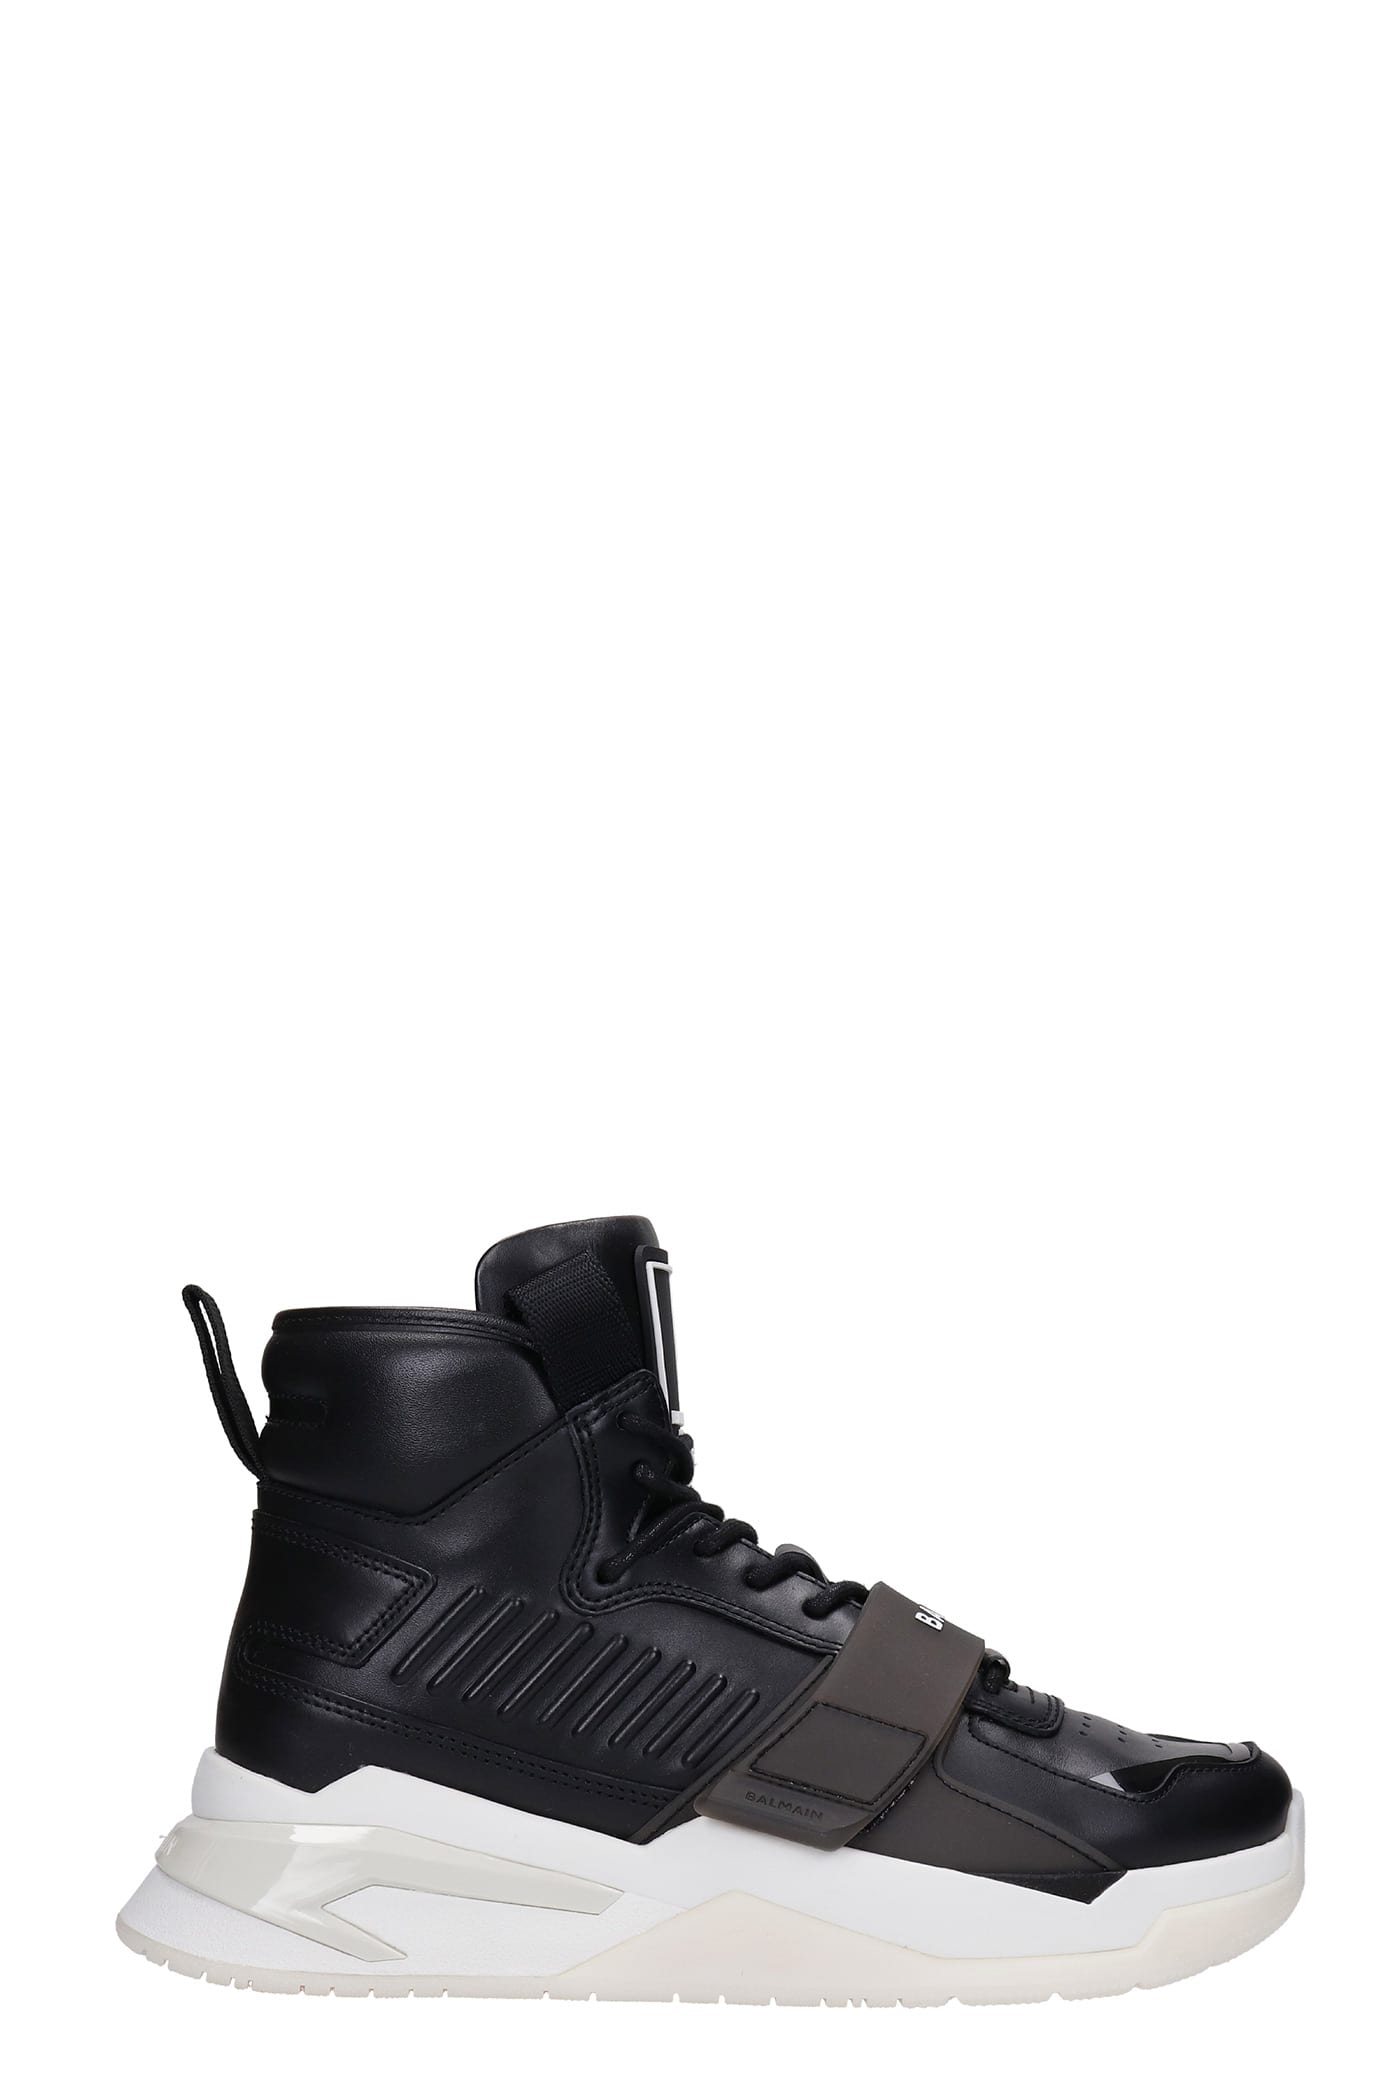 Balmain B-ball Strap Sneakers In Black Leather